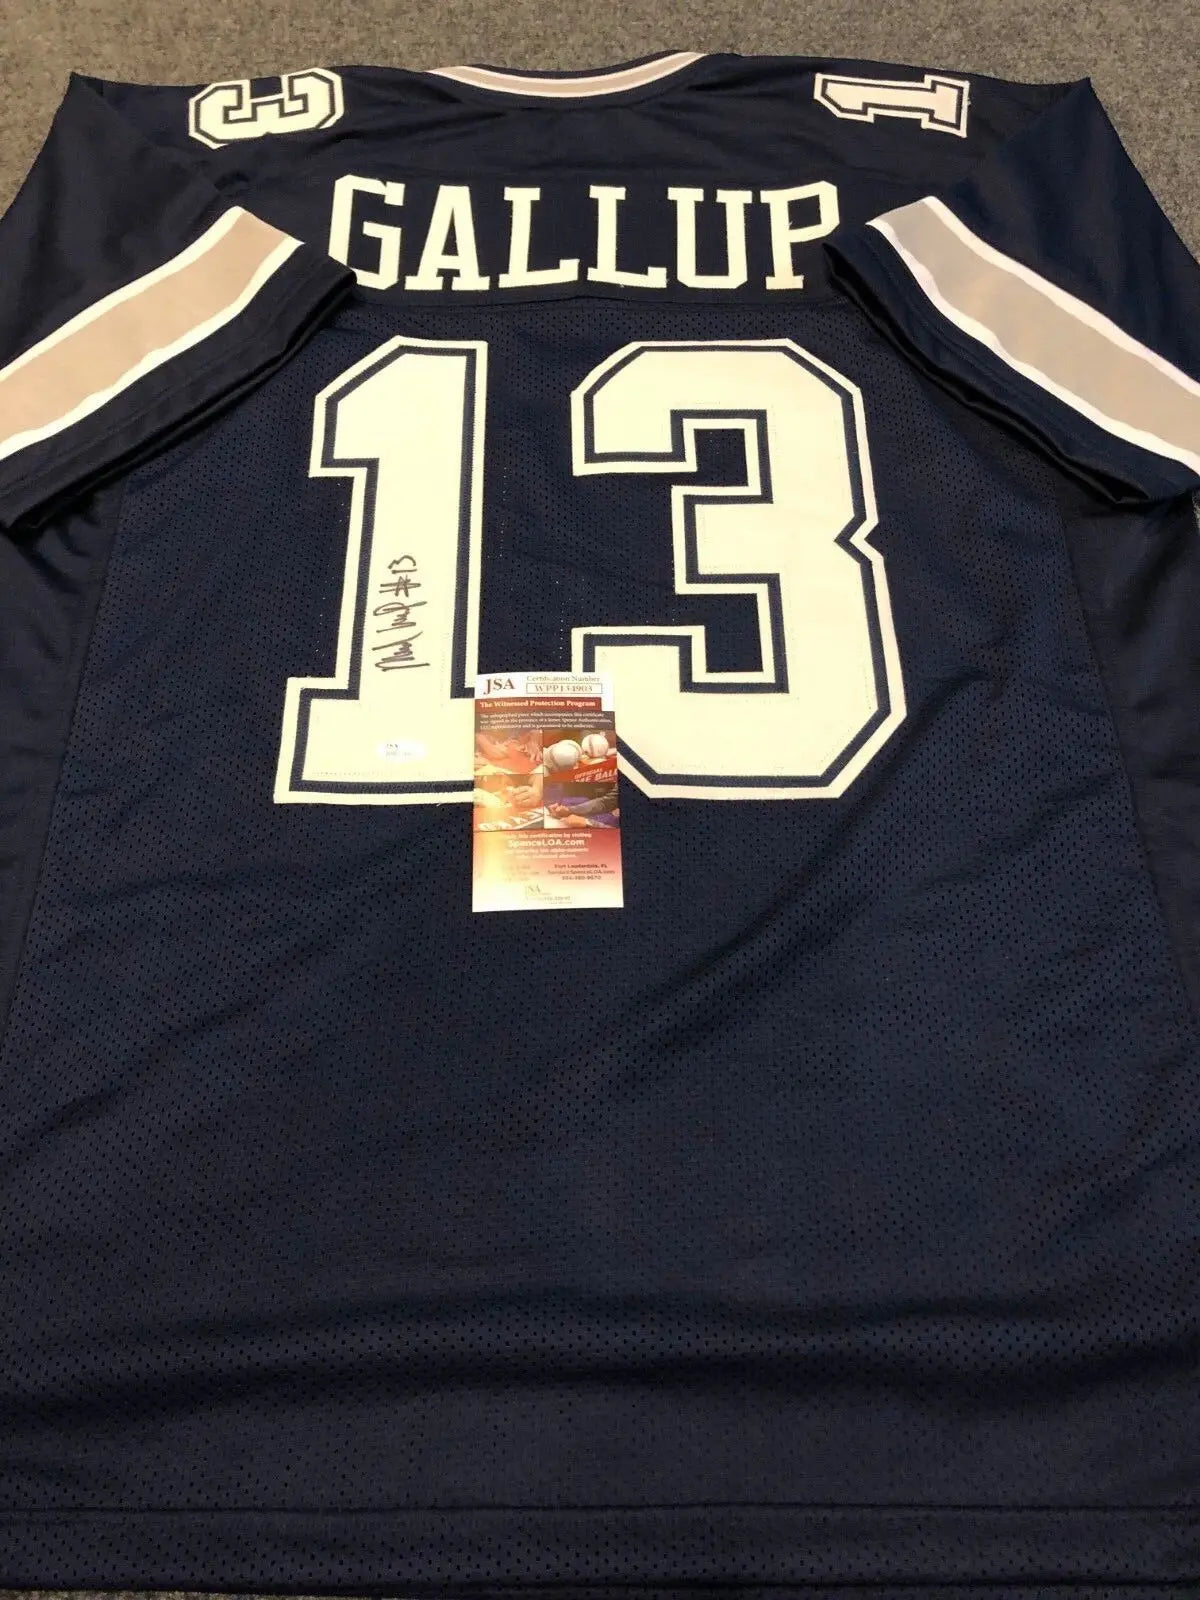 Gallup Michael jersey